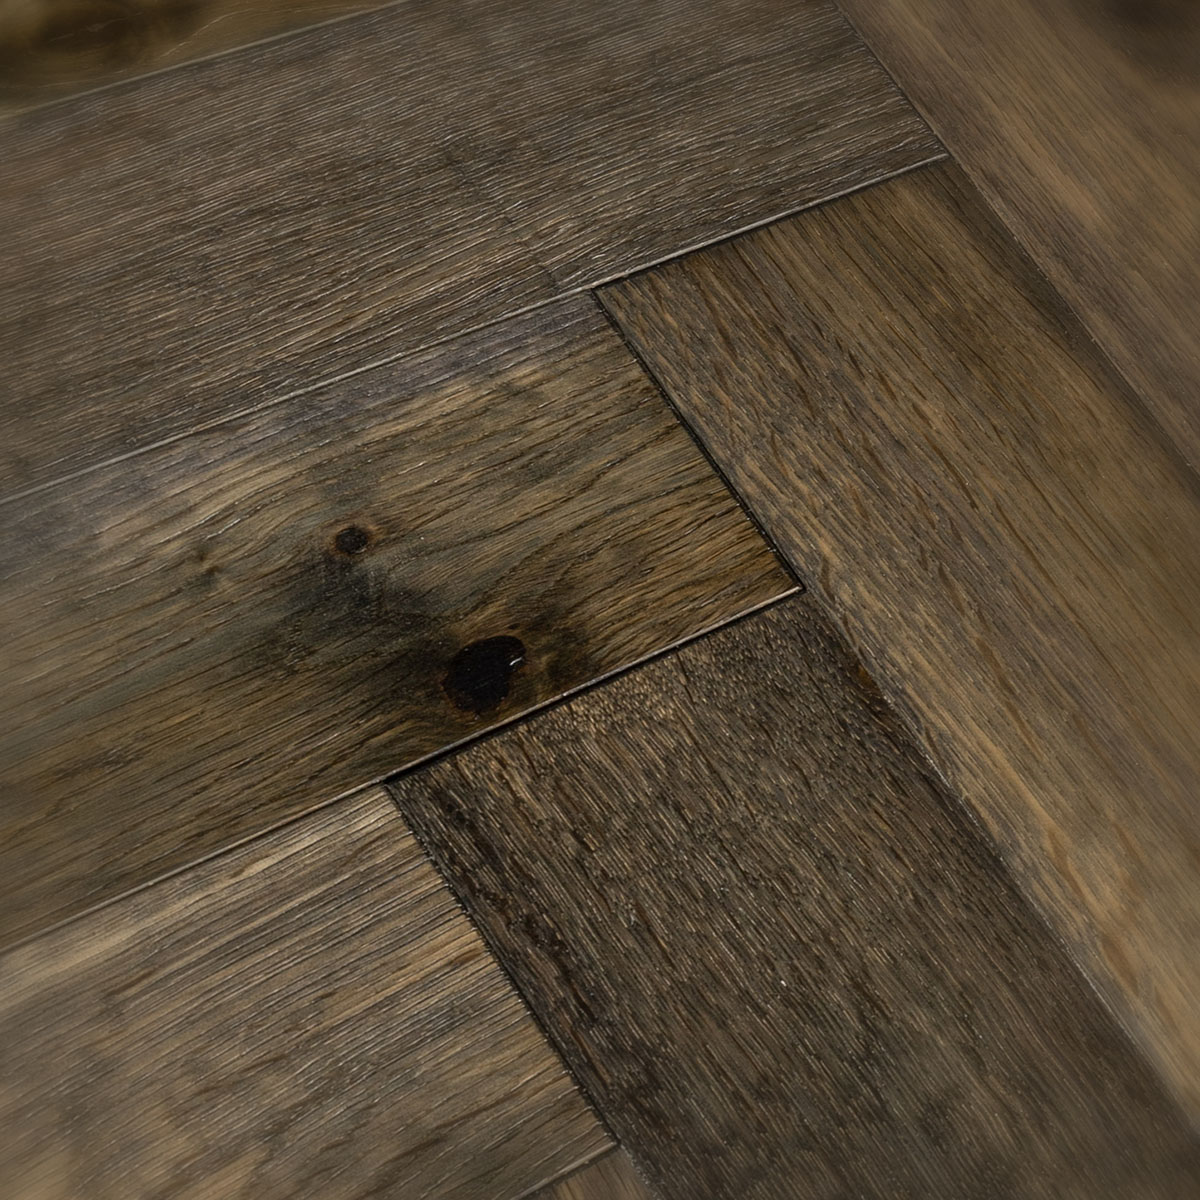 Balfour Grove - Rustic Oak Herringbone Floor 280mm x 70mm